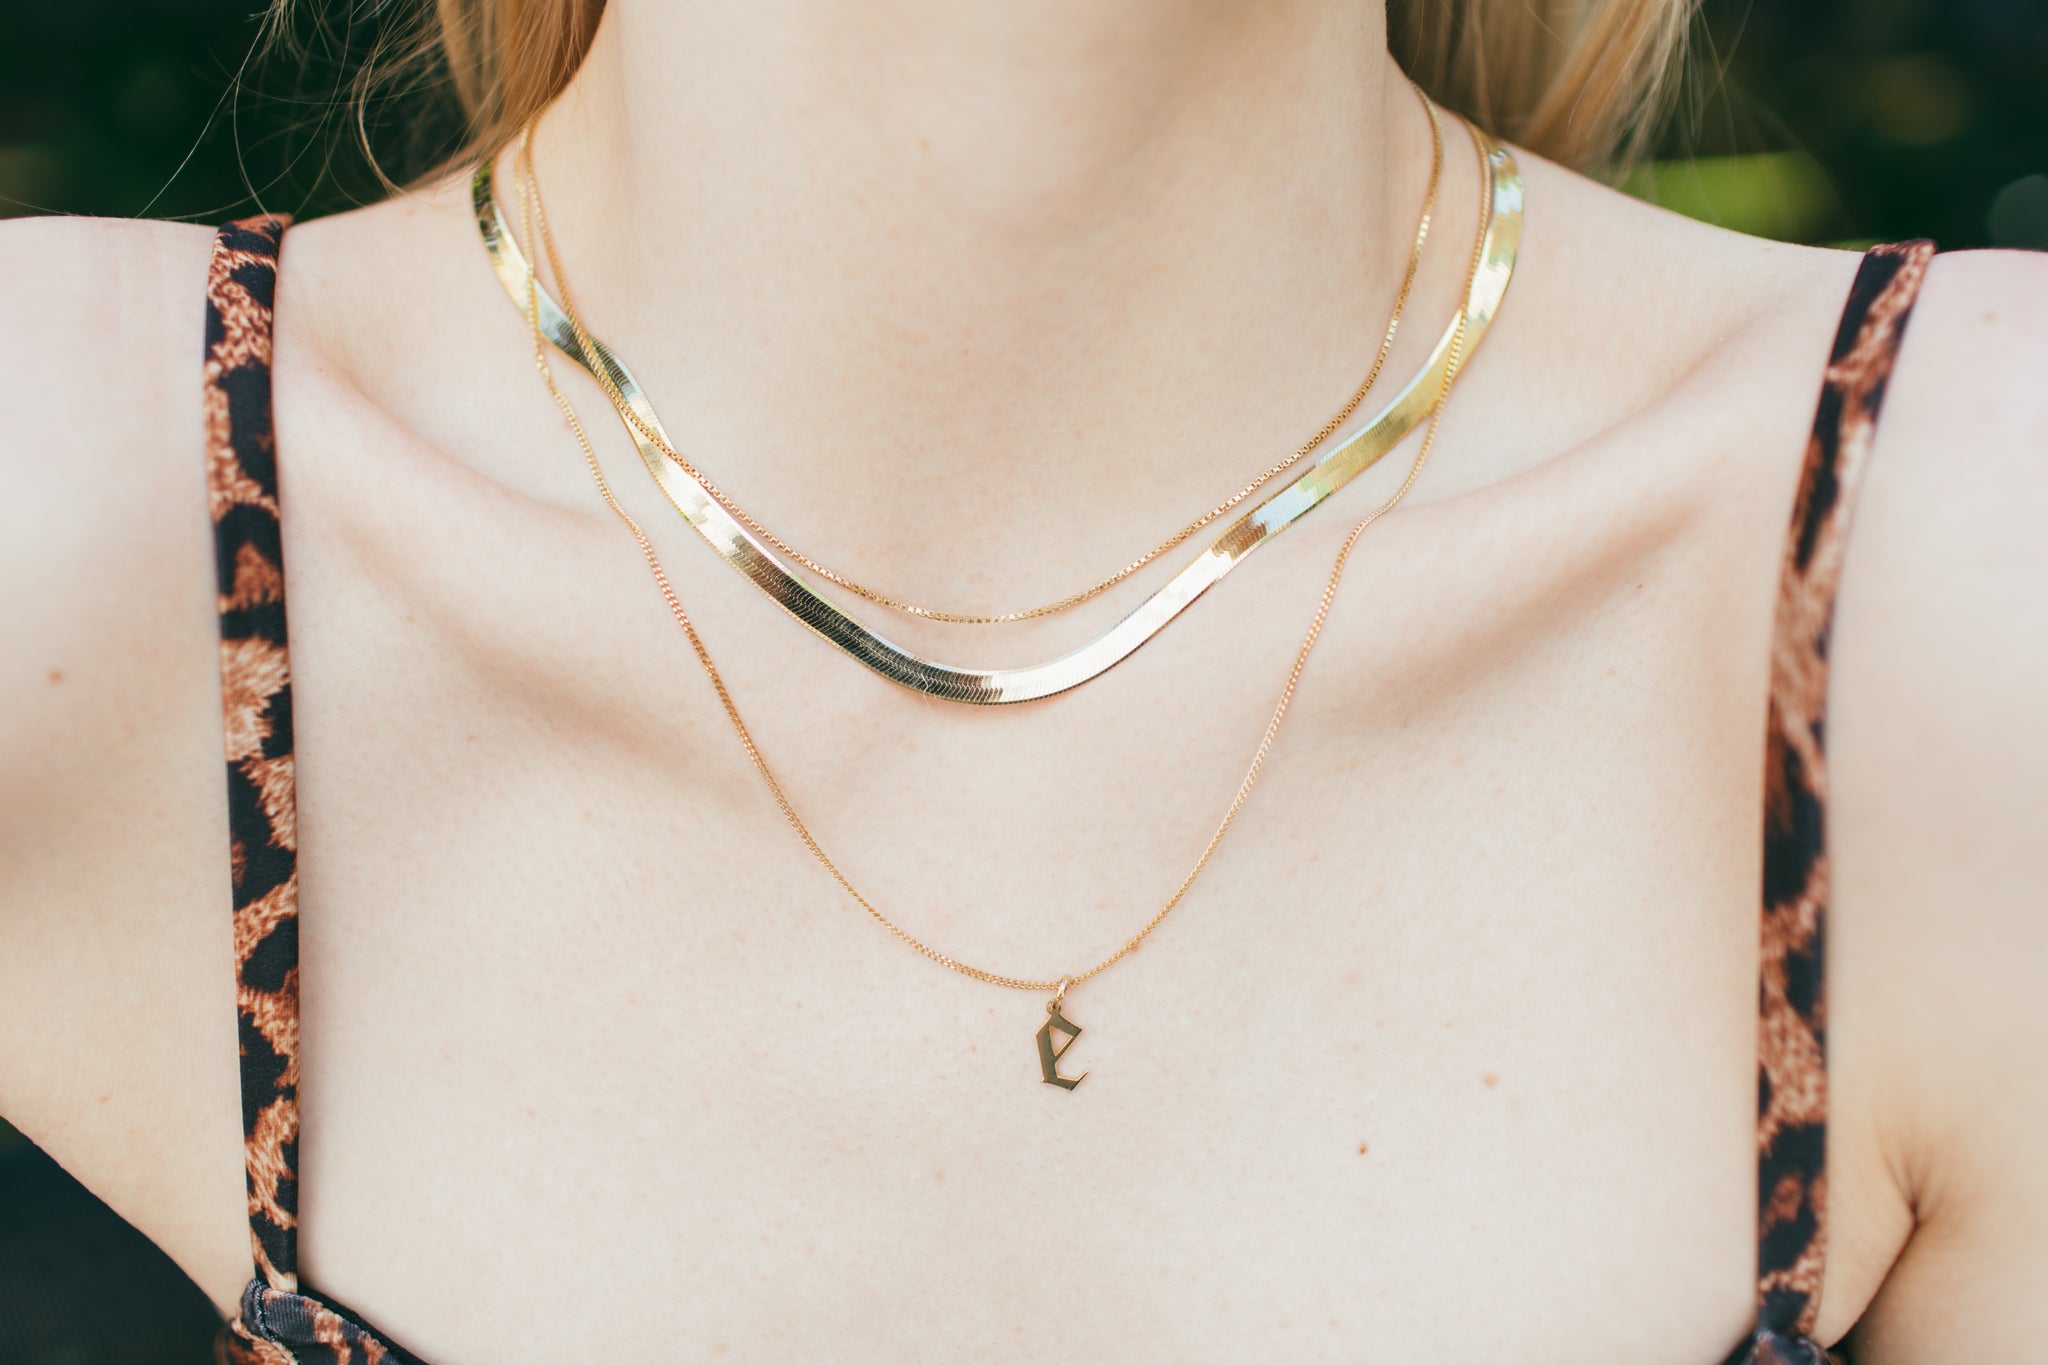 Gold Herringbone Chain Necklace